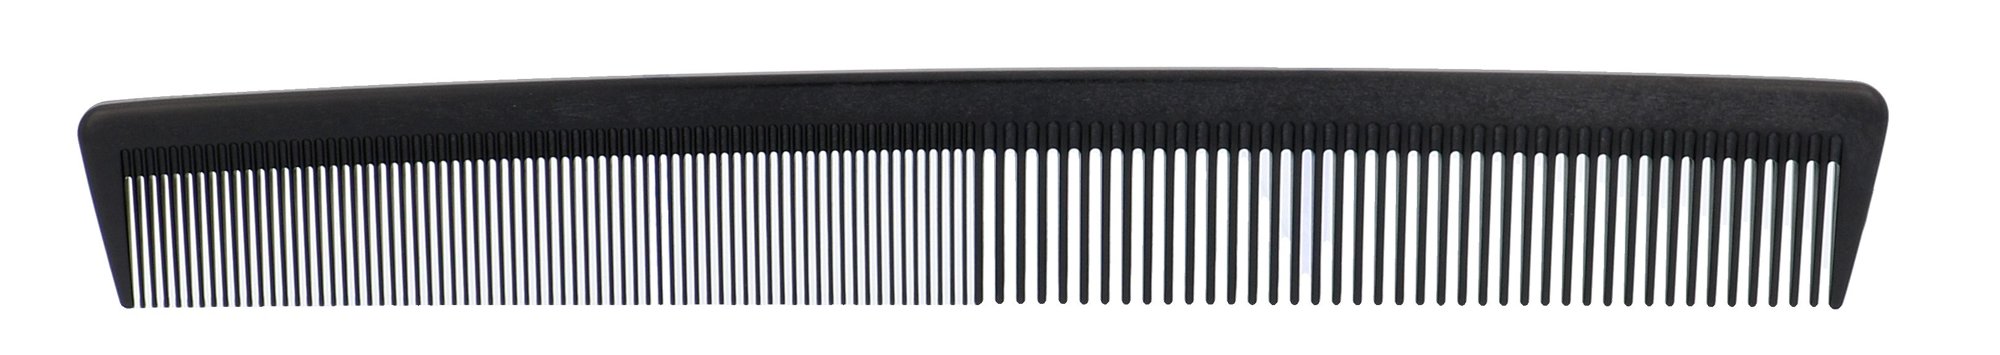 Tigi Pro Cutting Comb plaukų šepetys